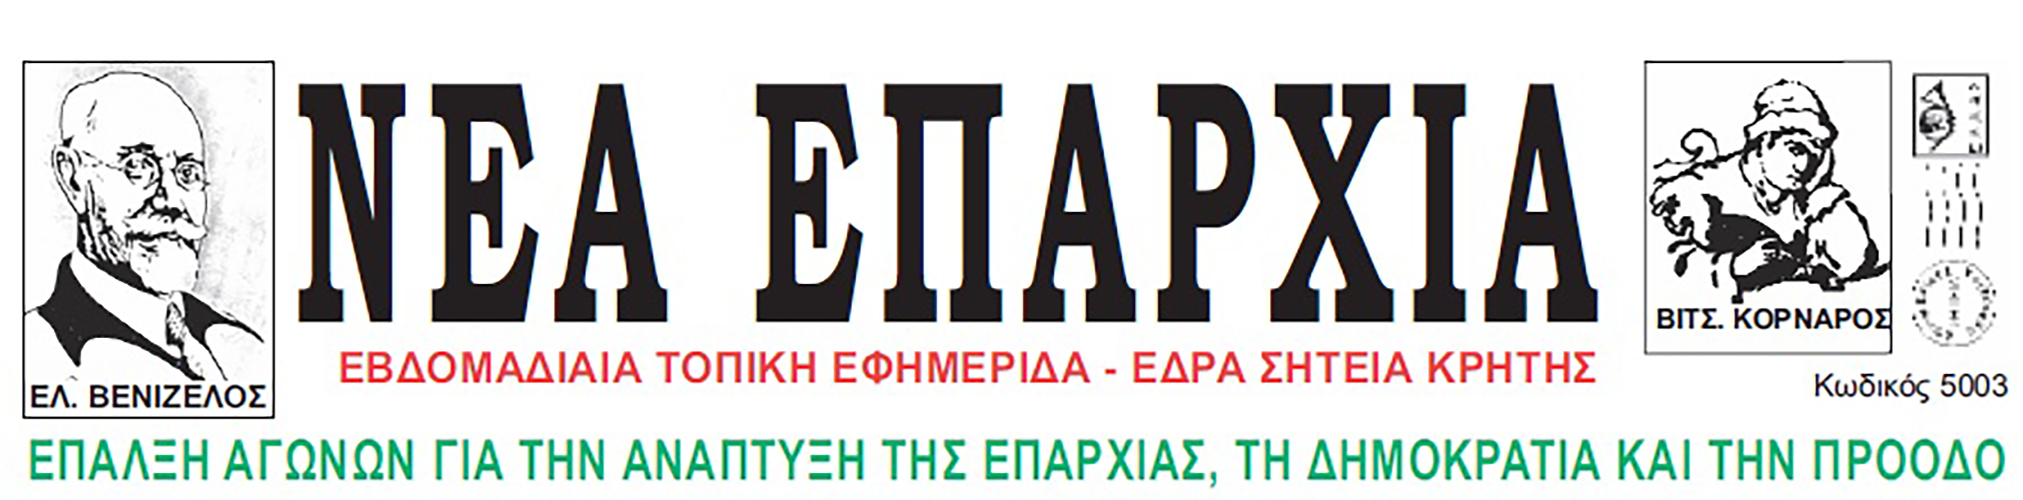 Nea Eparxia newspaper is one of the TEDxSitia 2022 sponsors.